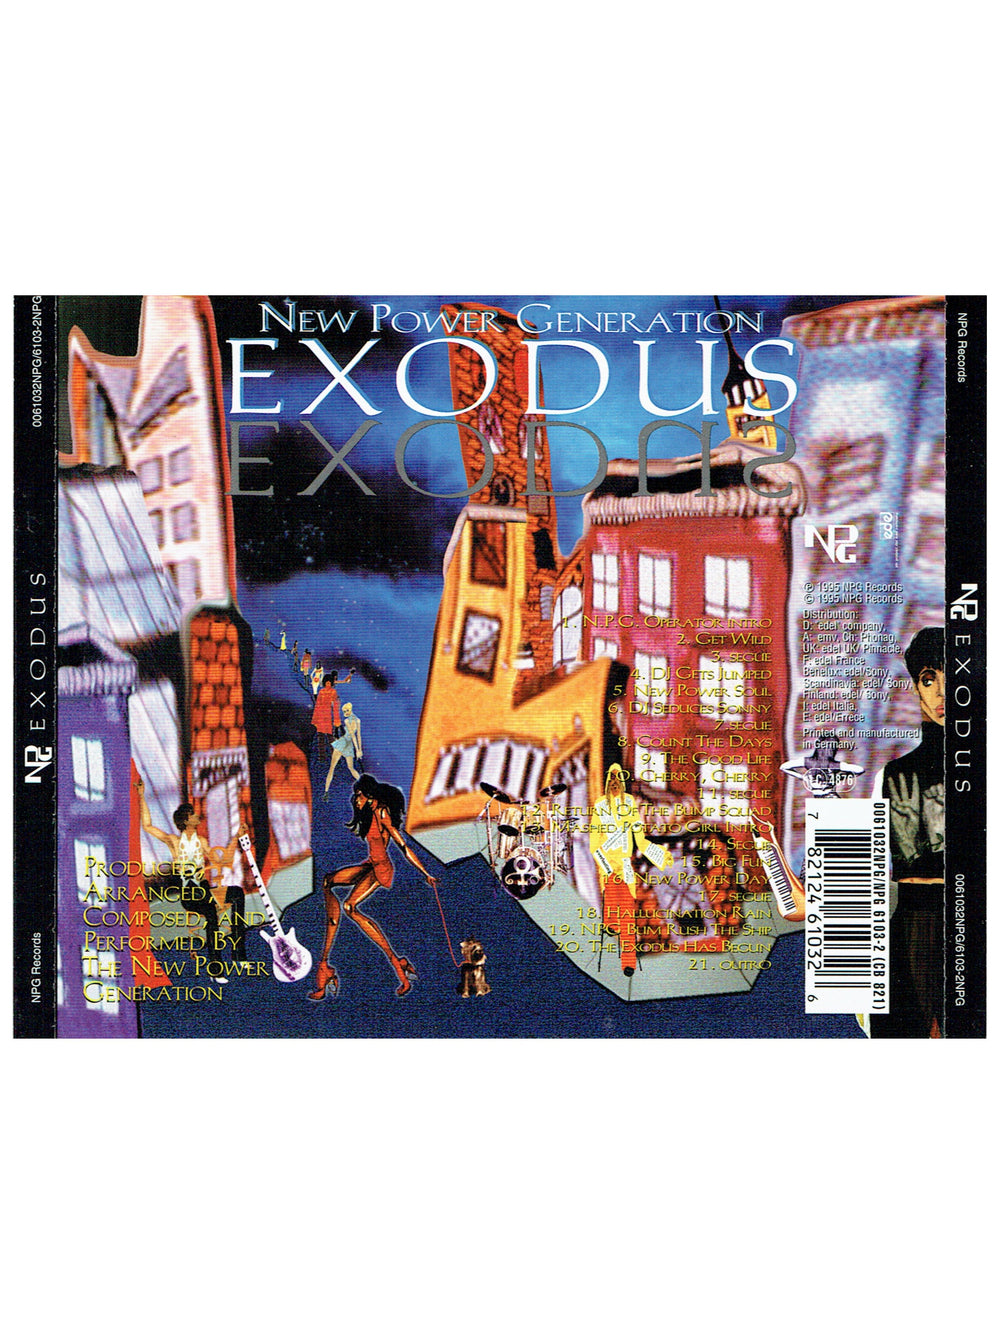 Prince – New Power Generation - Exodus CD Album EU Preloved: 1995